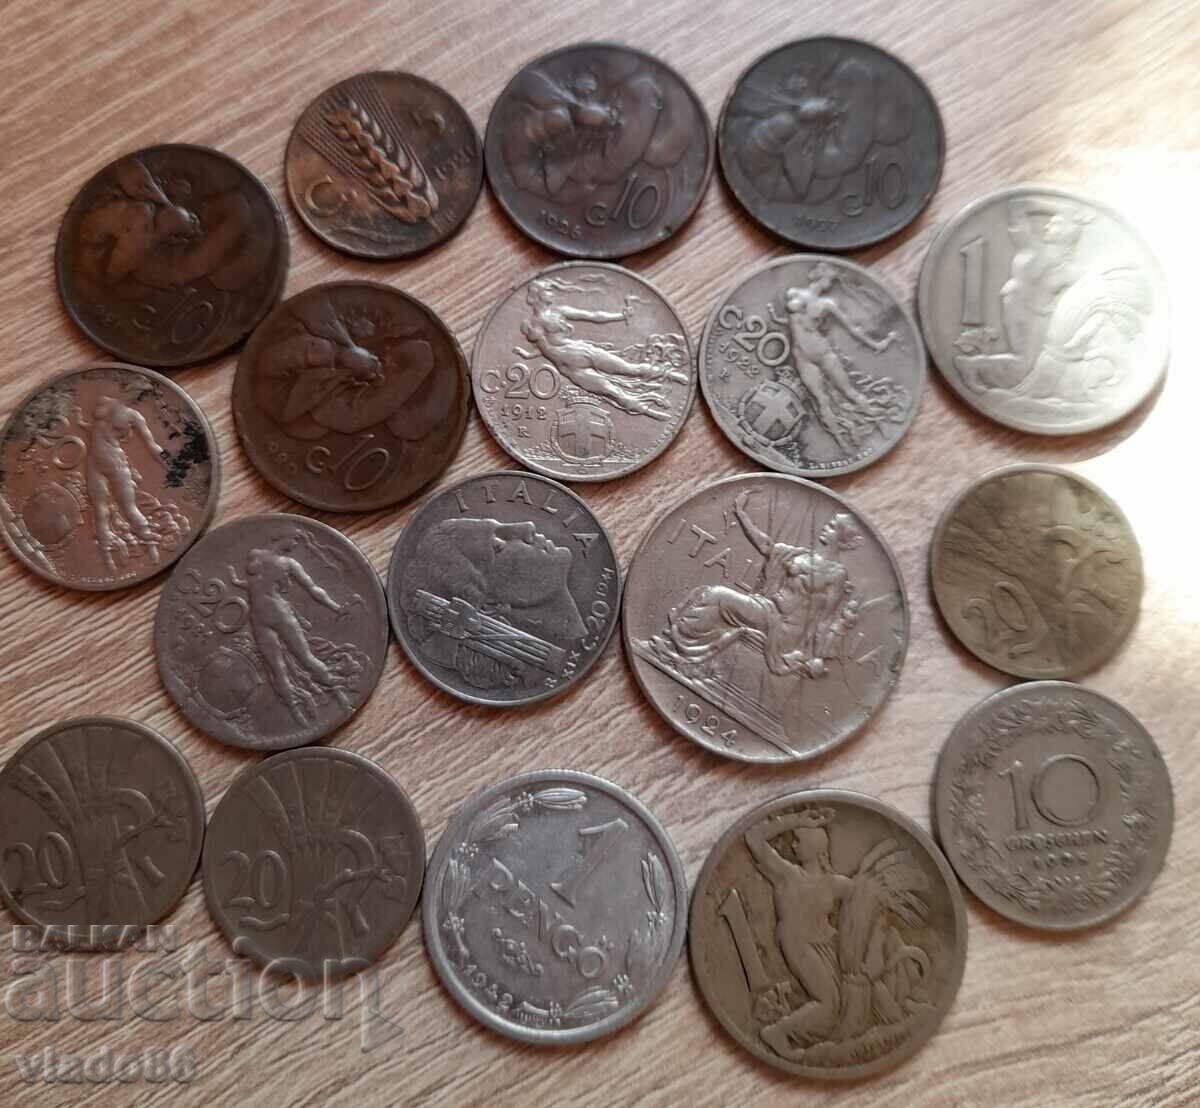 Lot of old Italian, Czech, Austrian coins